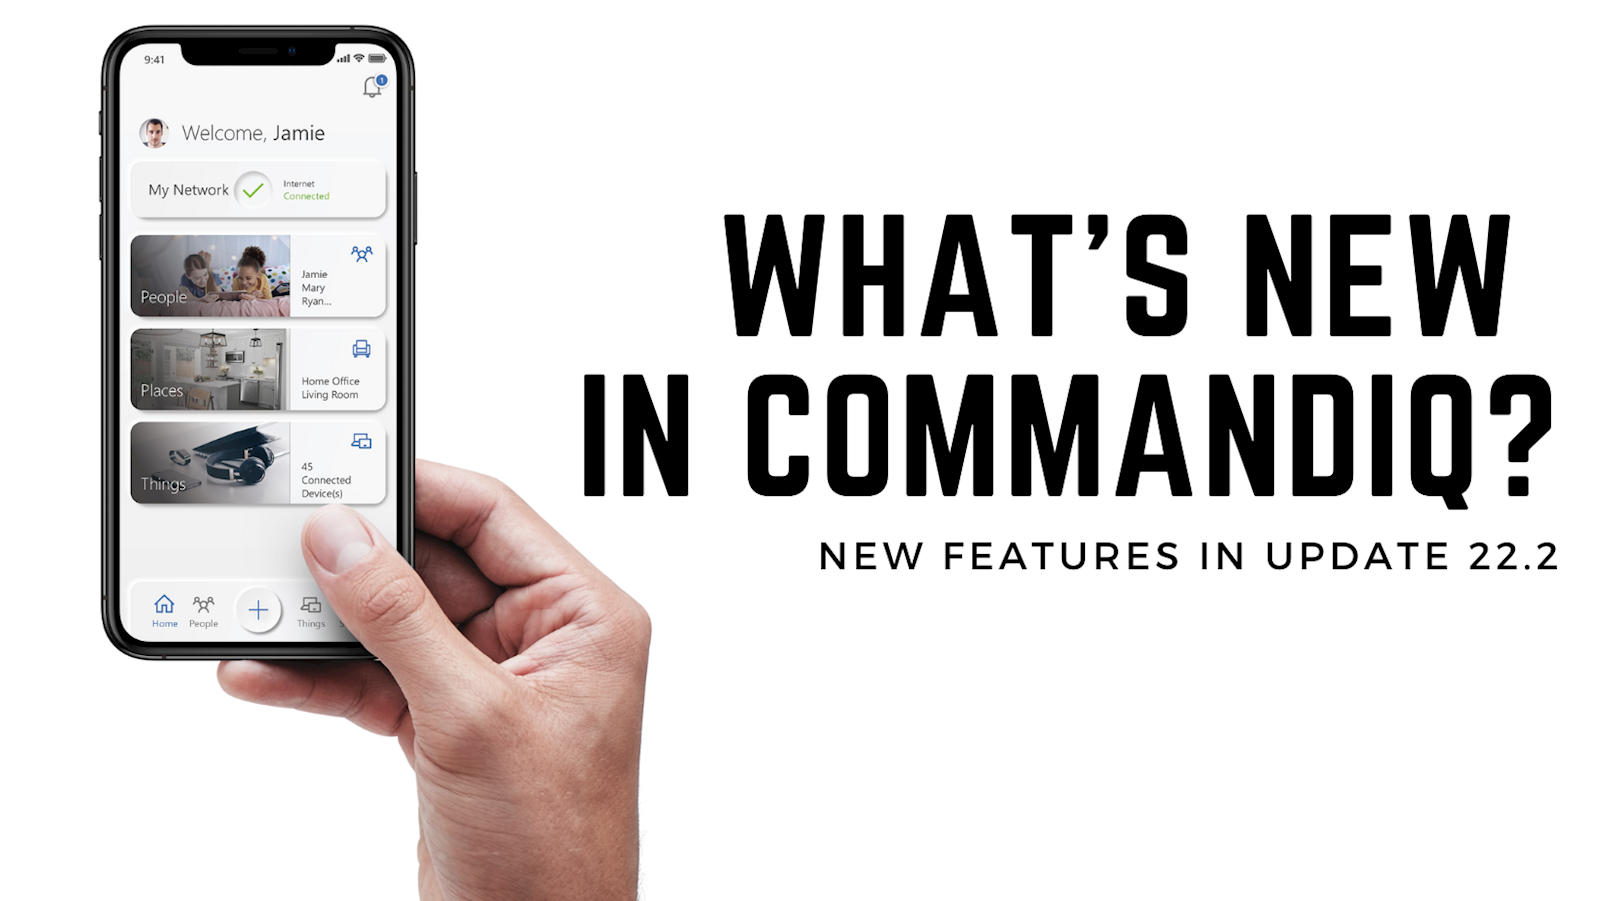 Coming Soon to CommandIQ - July 2022 thumbnail